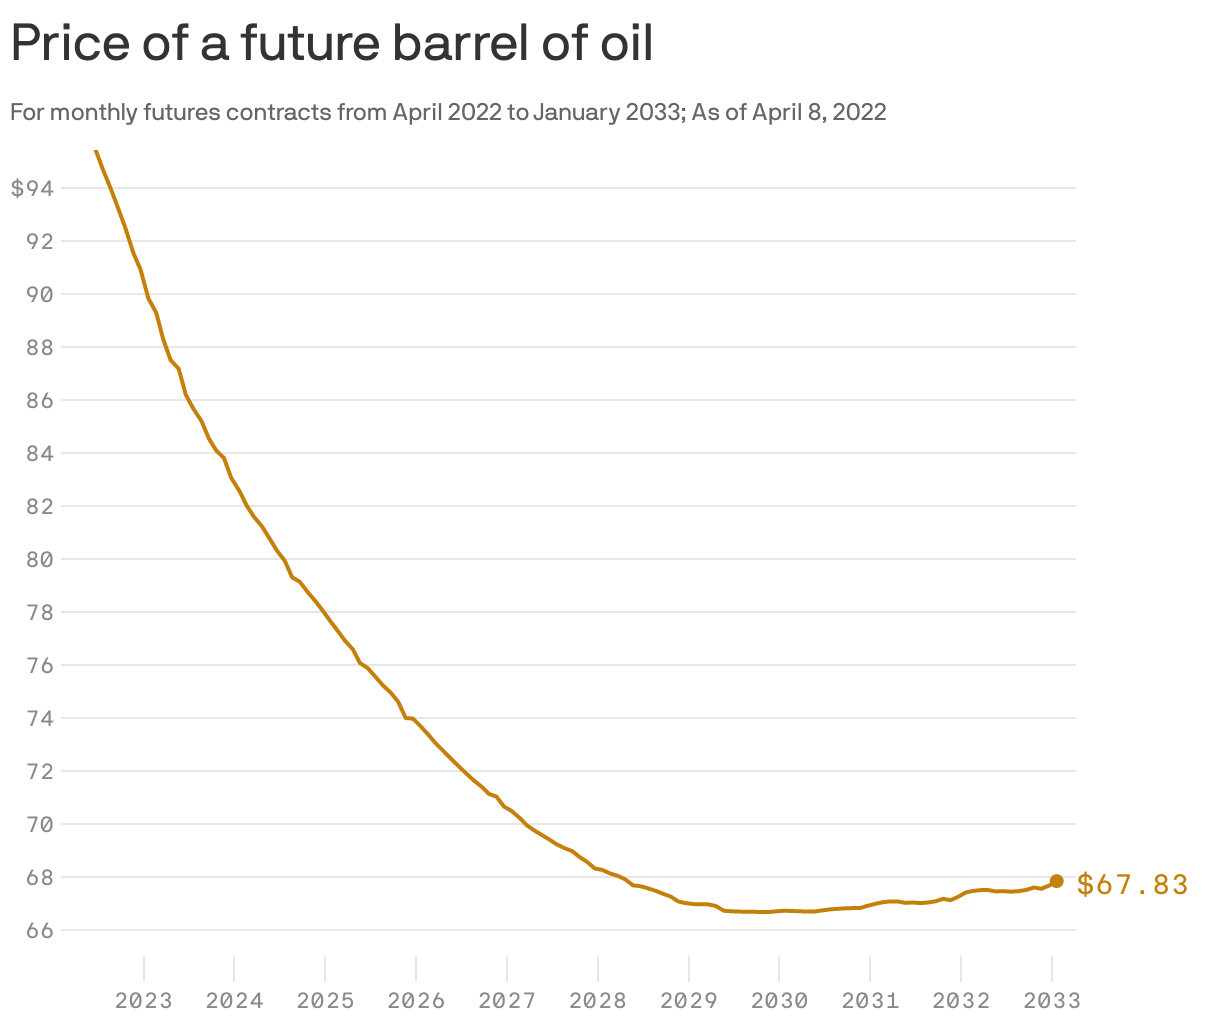 Price of a future barrel of oil